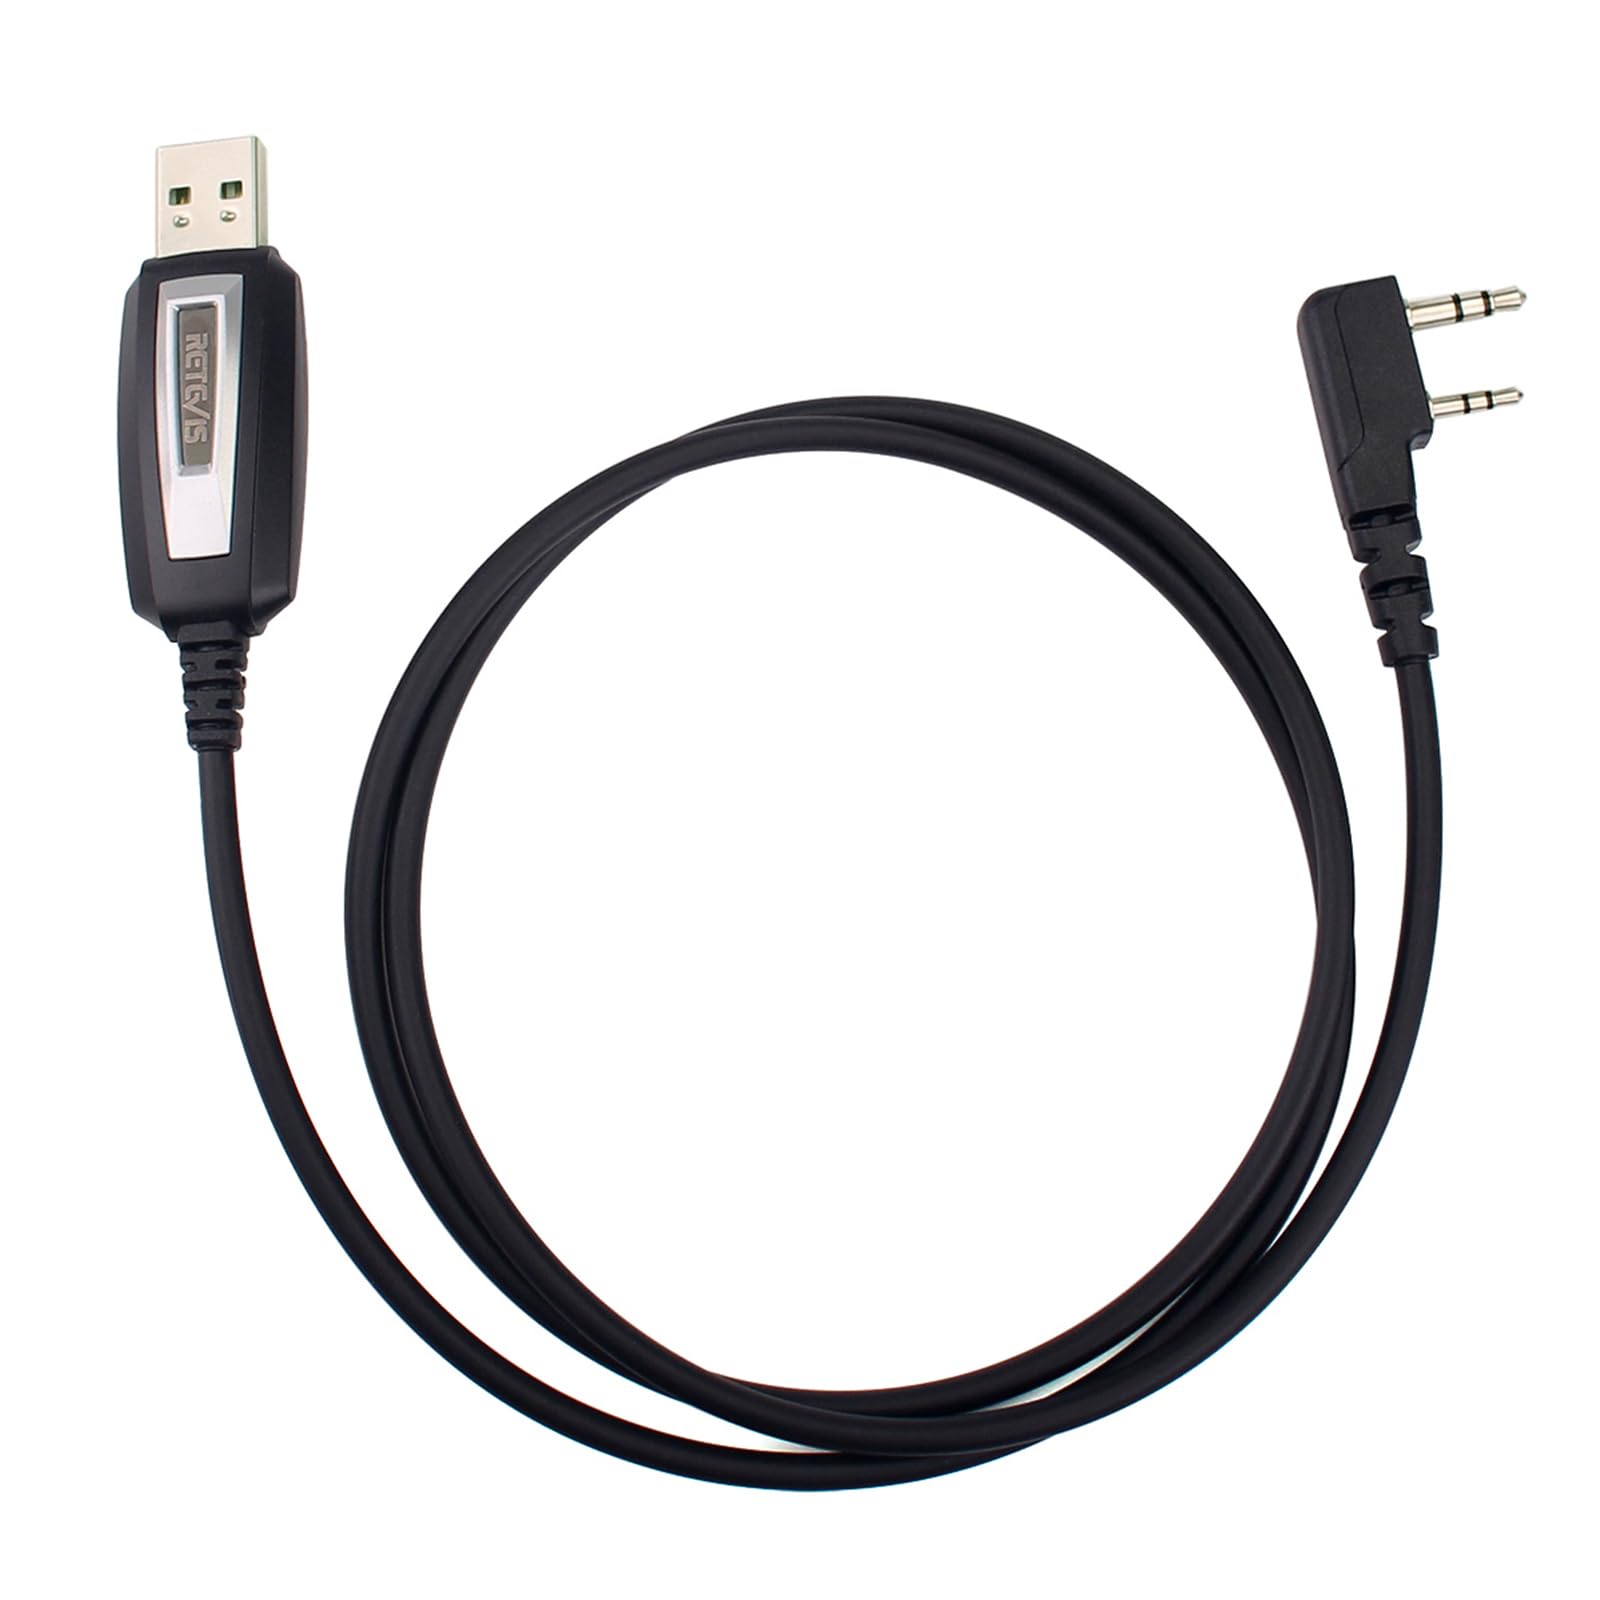 Retevis 2 Pin 2 Way Radio USB Programming Cable Compatible with Retevis RT22 RT21 RT68 RT22S RT19 RT86 RT15 H-777 NR10 RT85 RB89 RB29 Baofeng UV-5R BF-888S Arcshell AR-5 TYT Walkie Talkie(1 Pack)